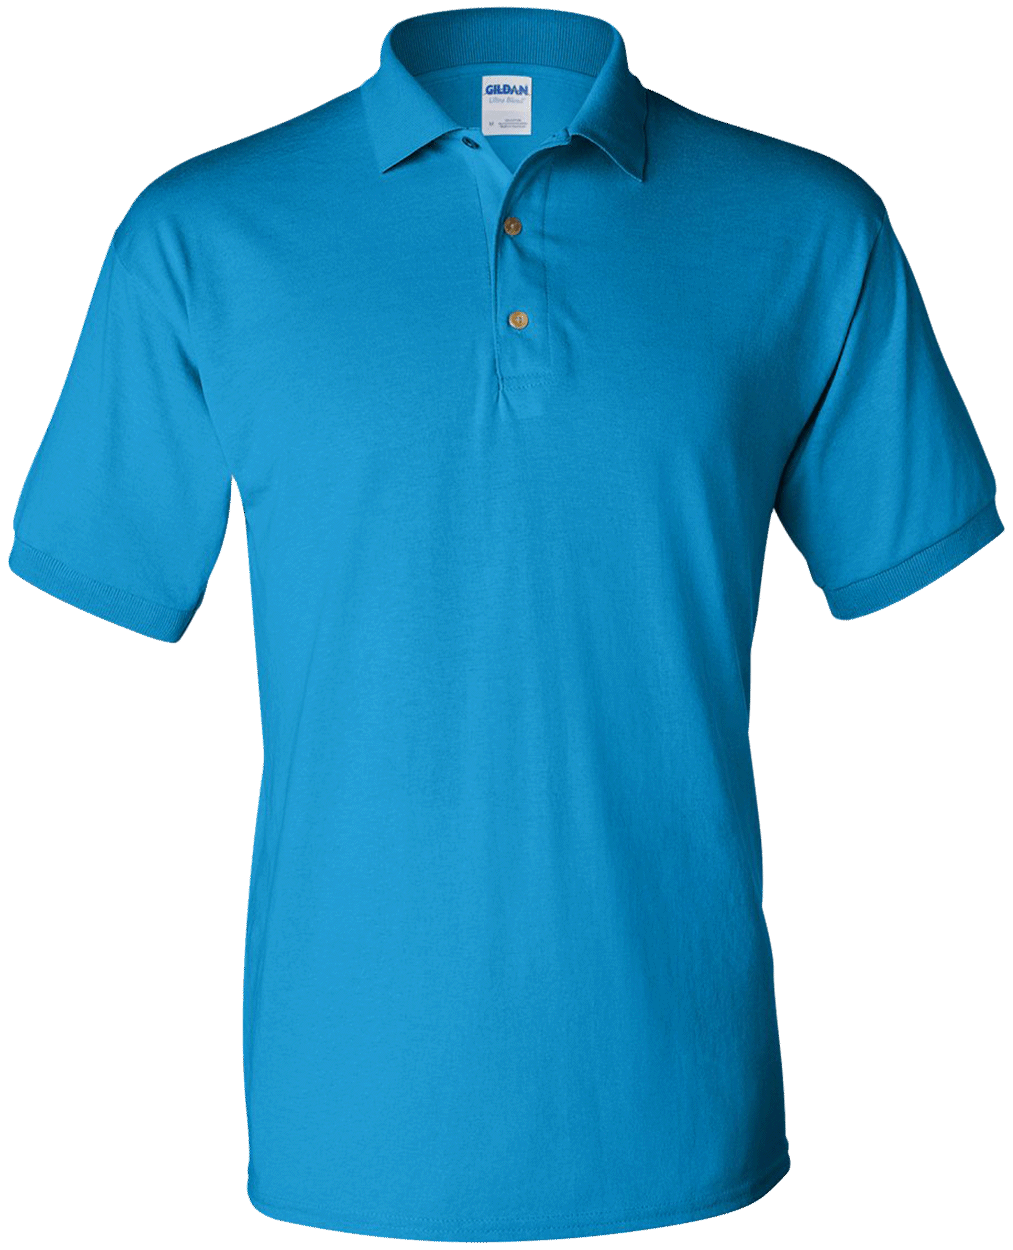 G880 Jersey Polo Shirt - CustomCat